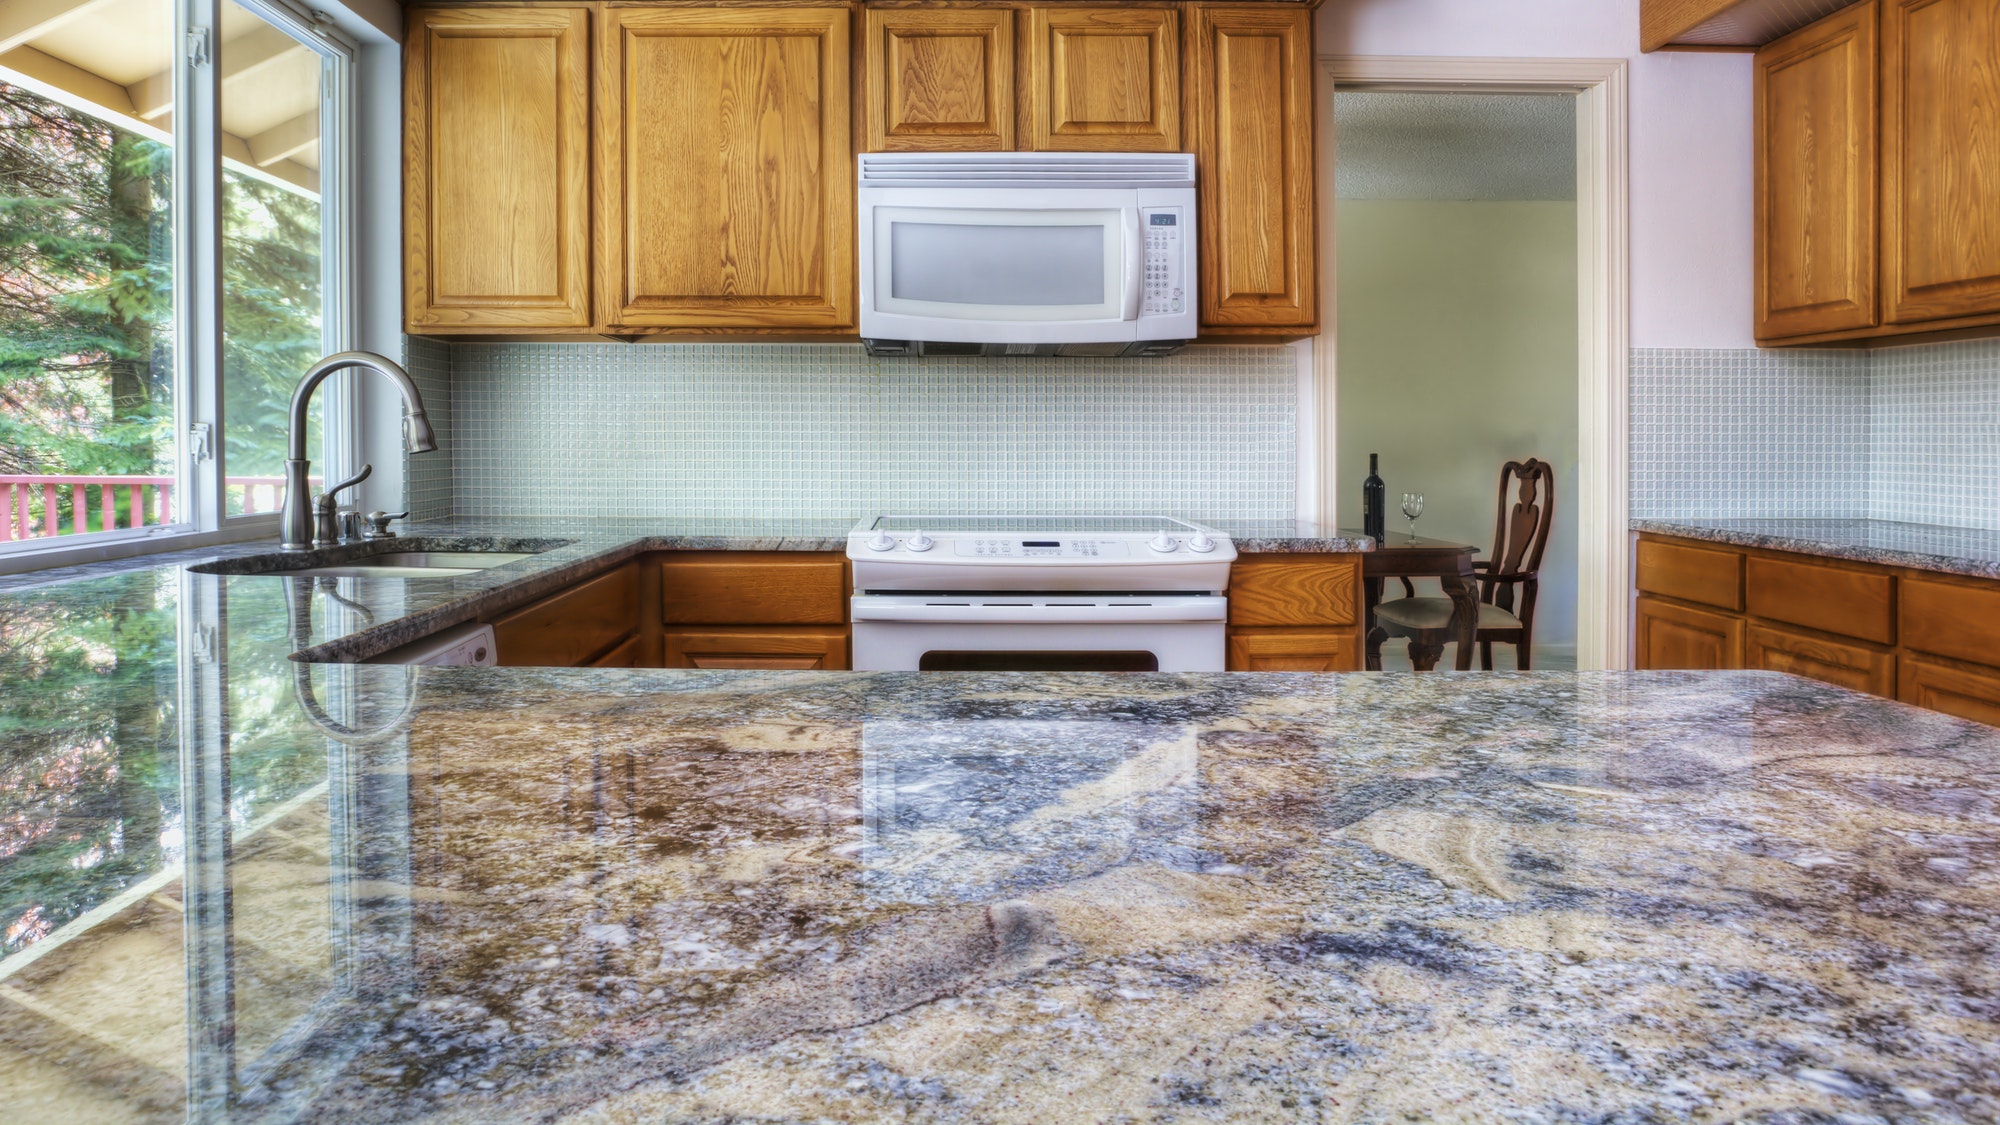 55289,Granite counter reflecting kitchen cabinets